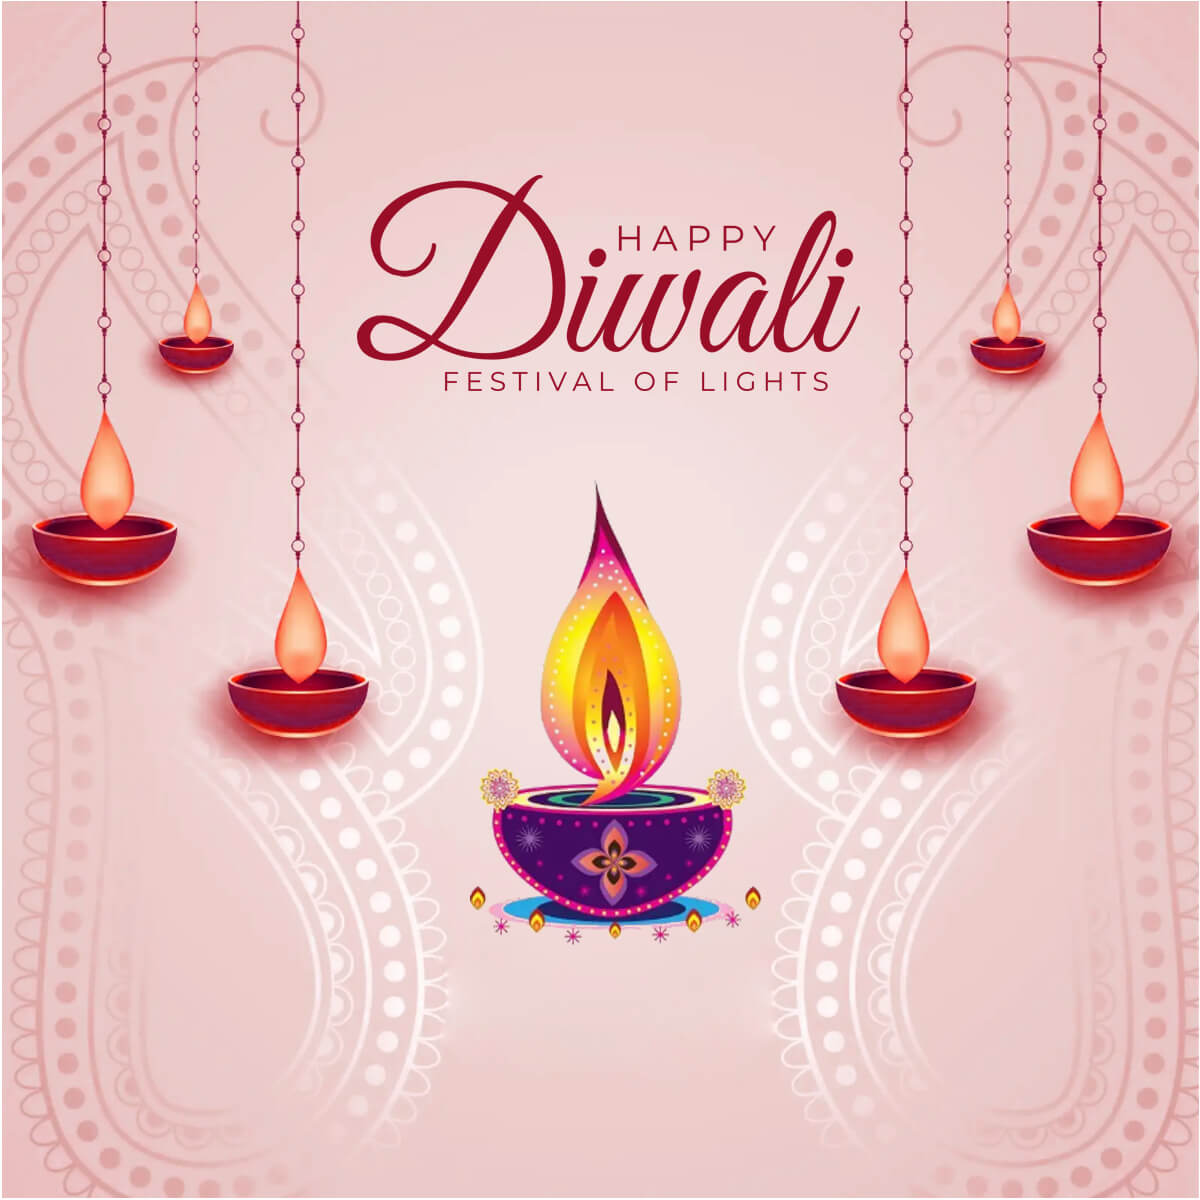 Banner design of happy diwali diya decoration vector image